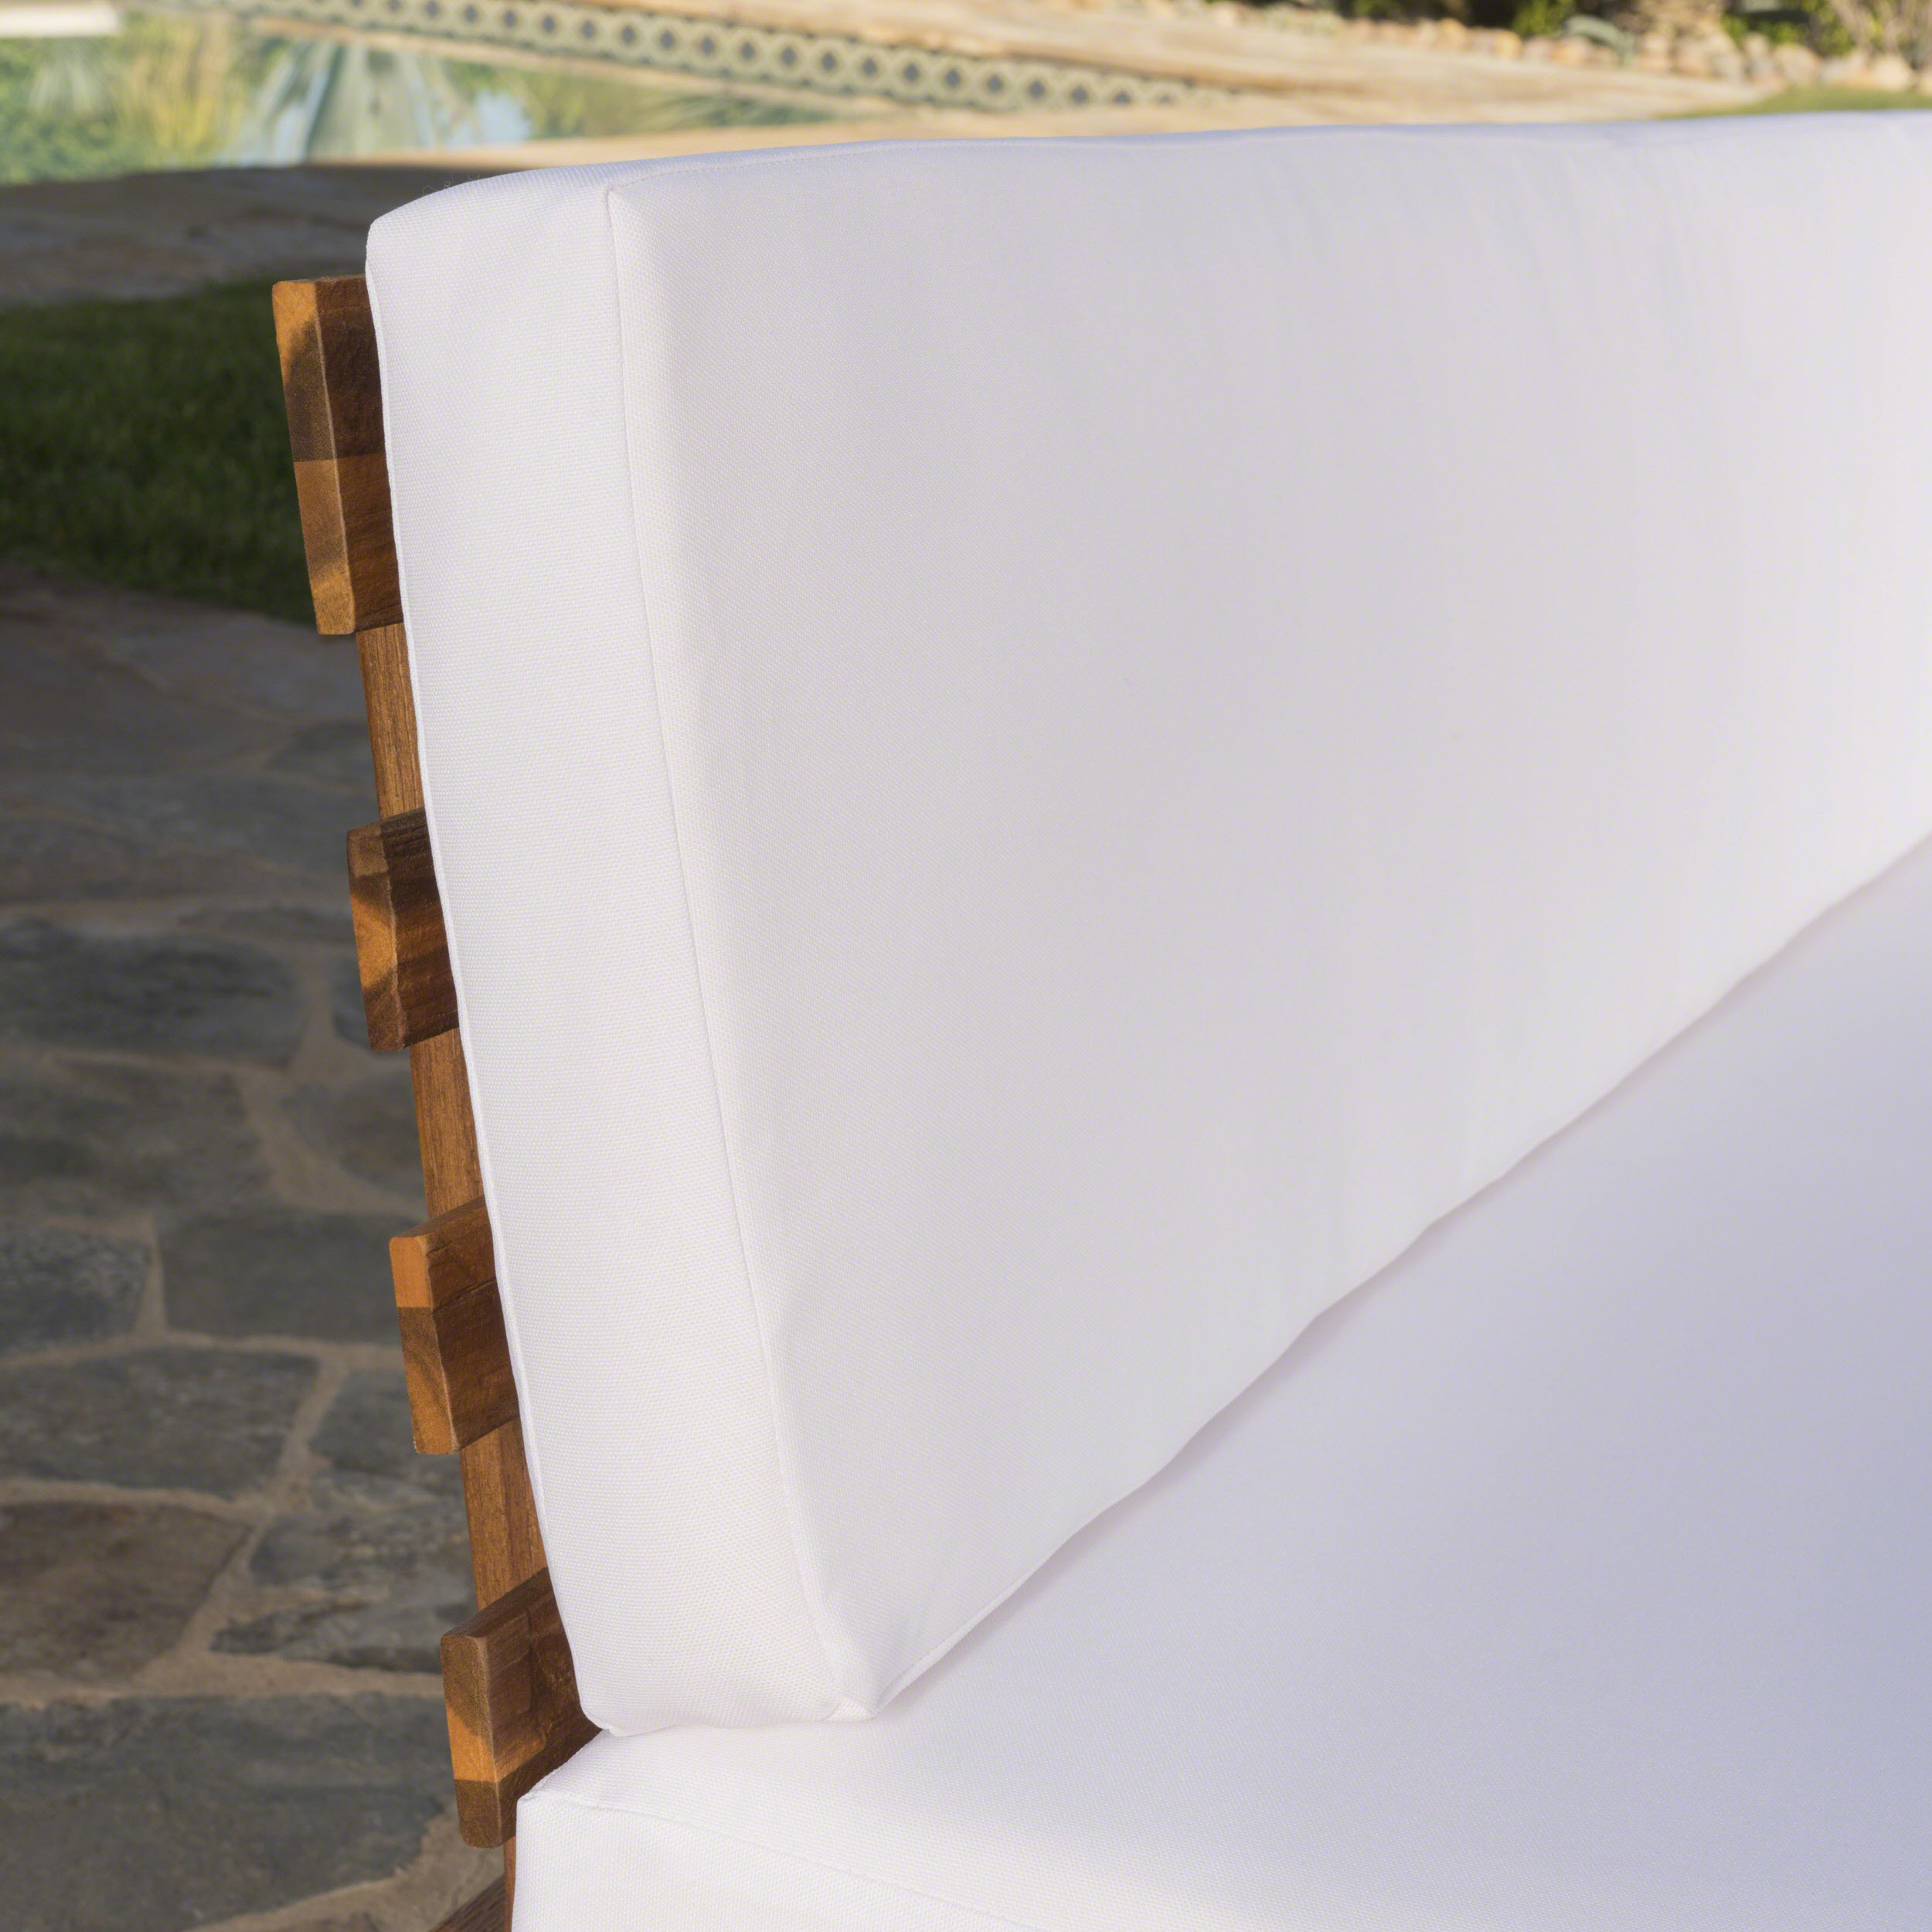 Park Outdoor V Shaped 4 Piece Acacia Wood Sectional Sofa Set with Cushions, Sandblast Finished, White - image 7 of 15